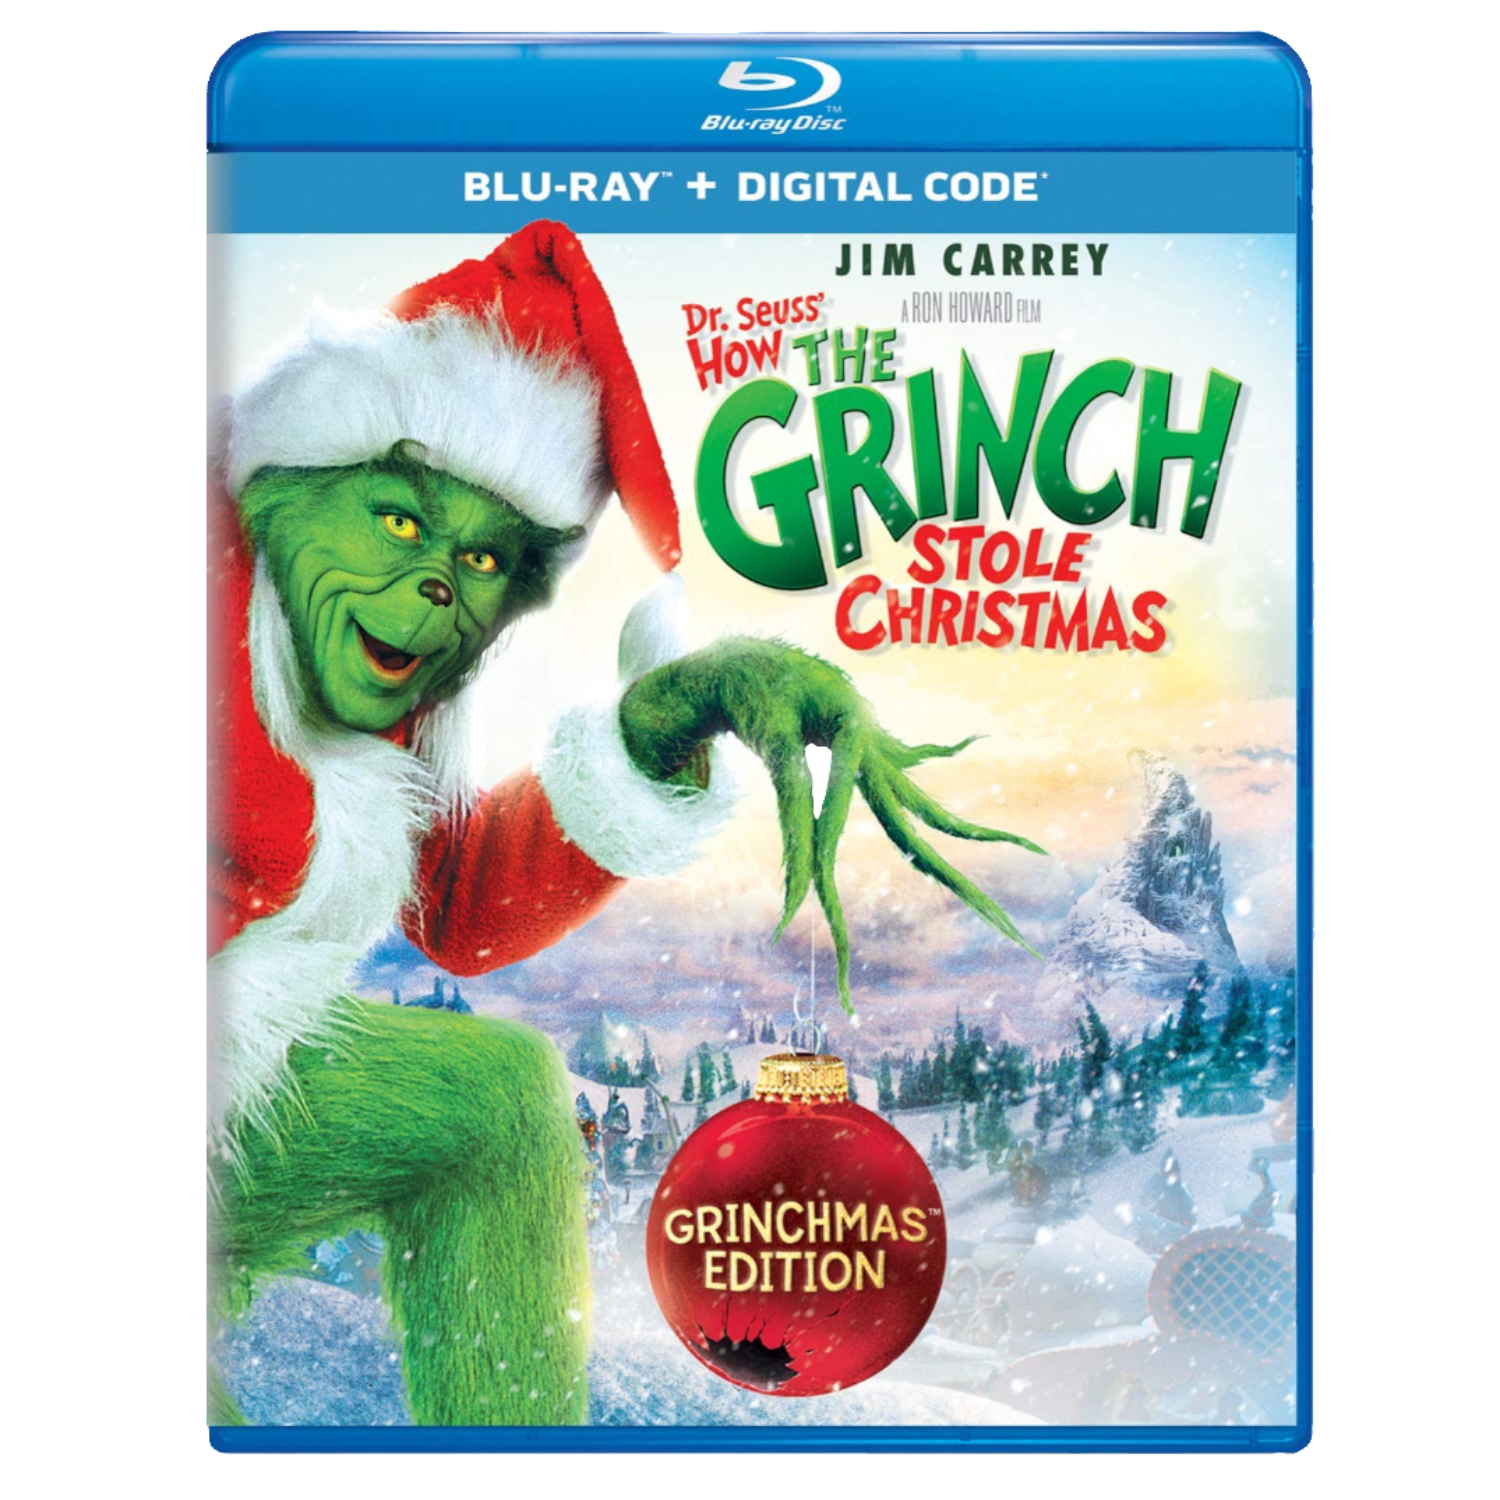 Dr Seuss' How The Grinch Stole Christmas